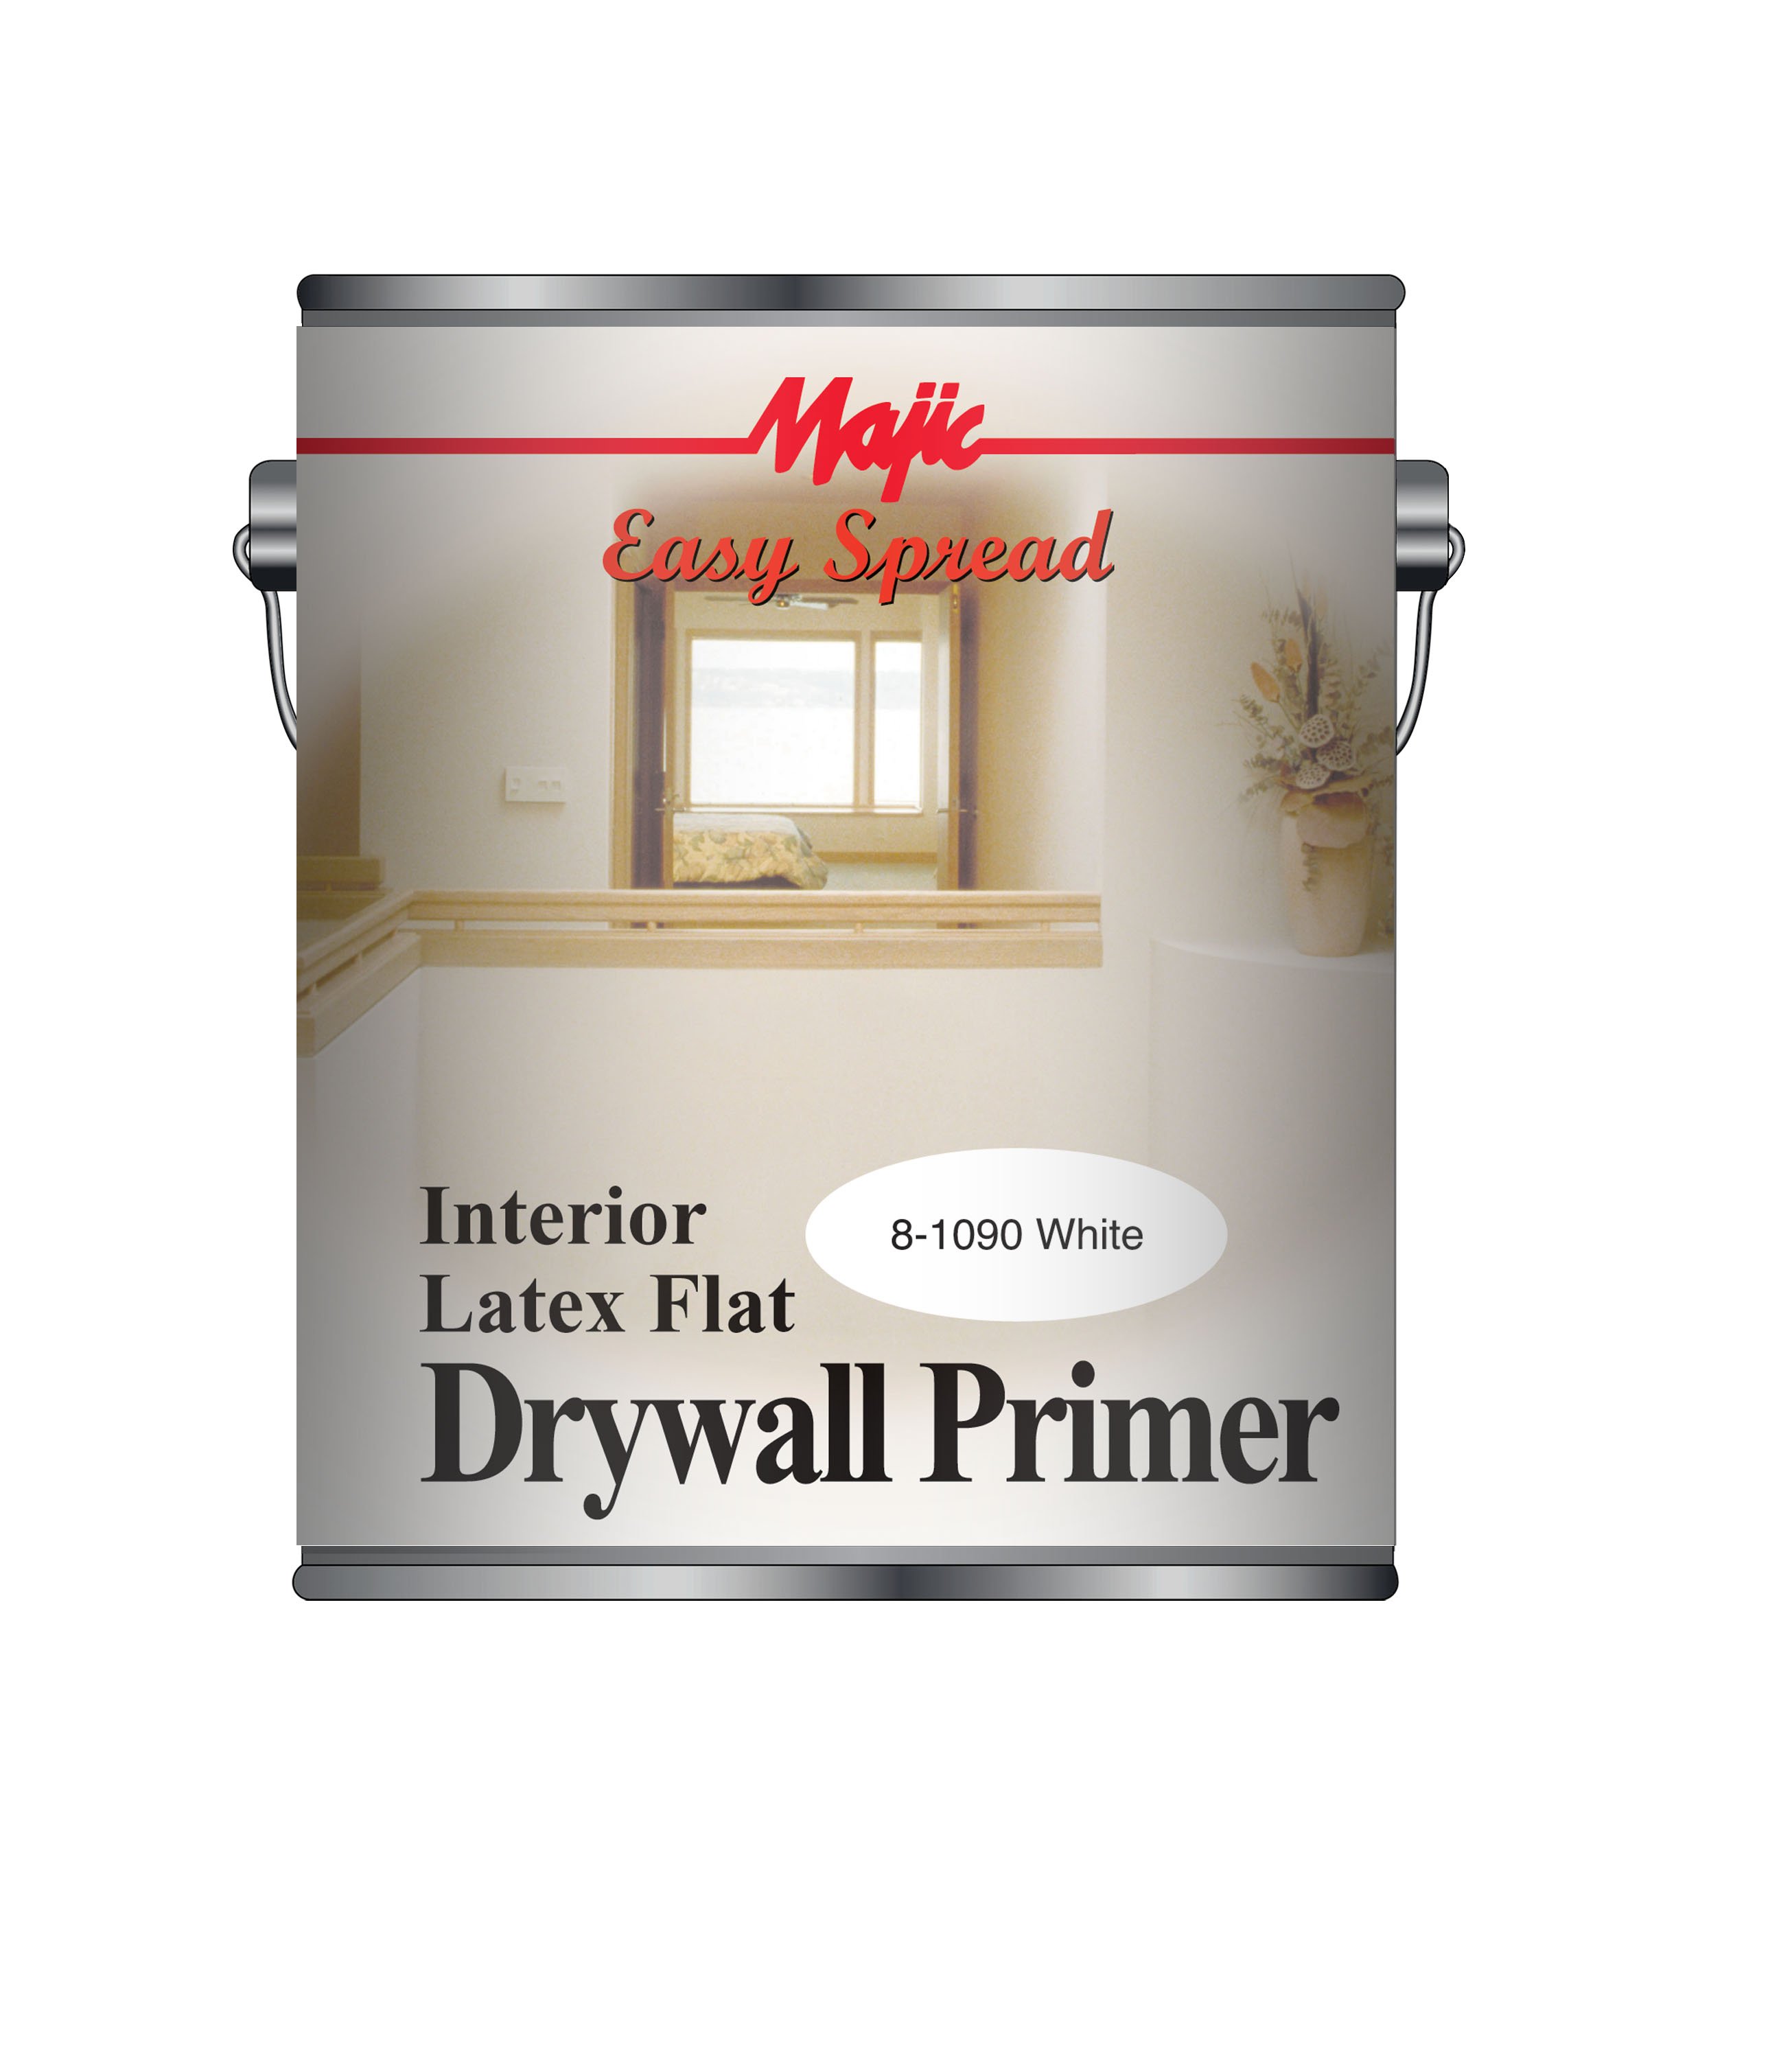 Majic Easy Spread Interior Latex Flat Drywall Primer White Gallon - 8-1090-1